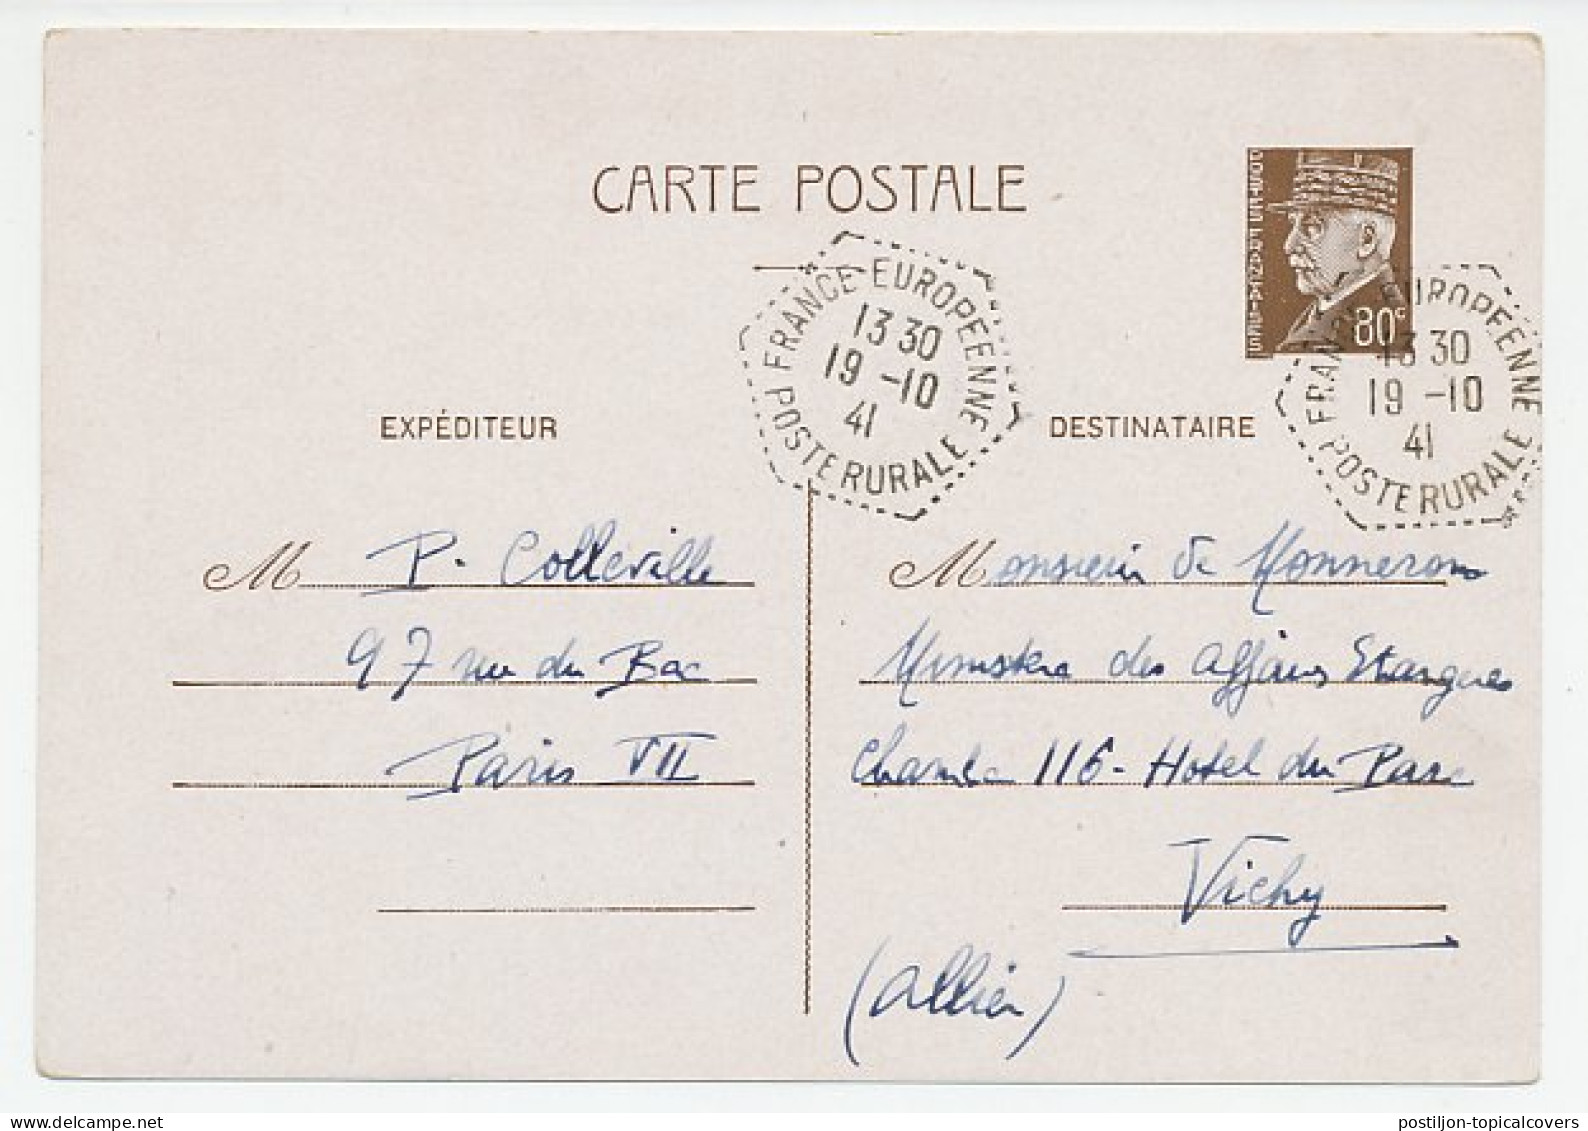 Postcard / Postmark France 1941 The European France - European Community